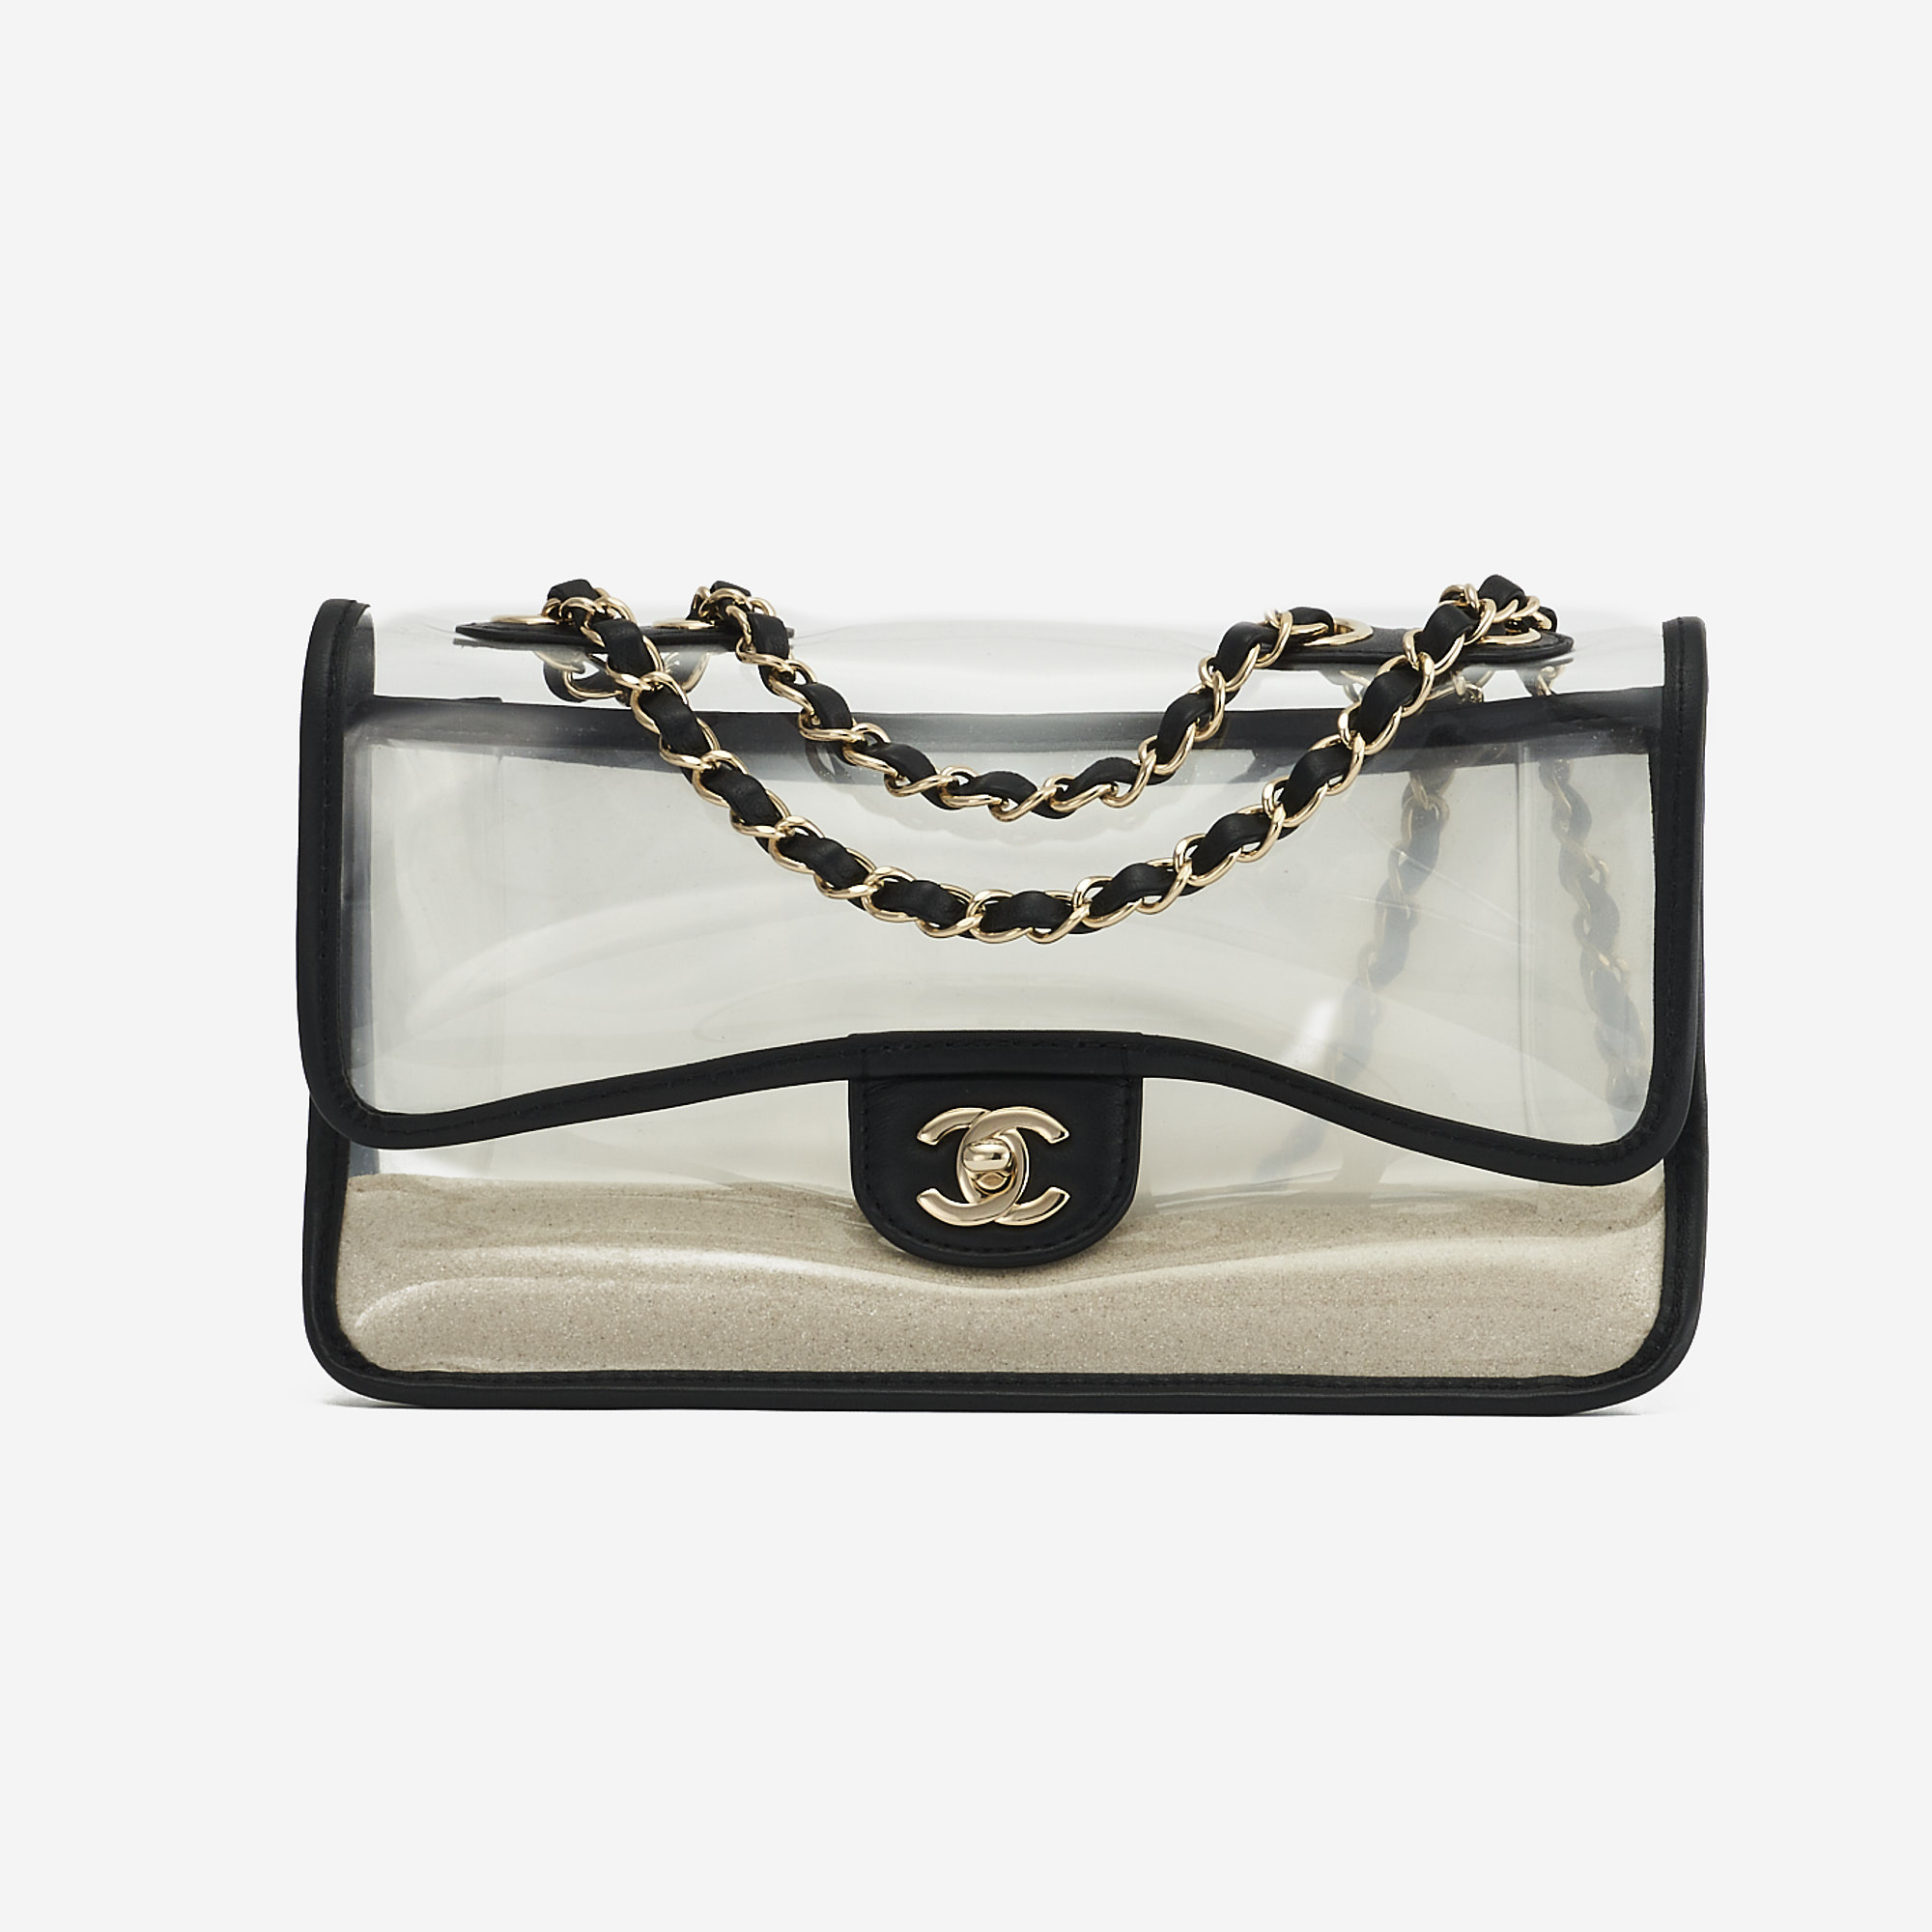 Chanel Sand Bag -3 For Sale on 1stDibs